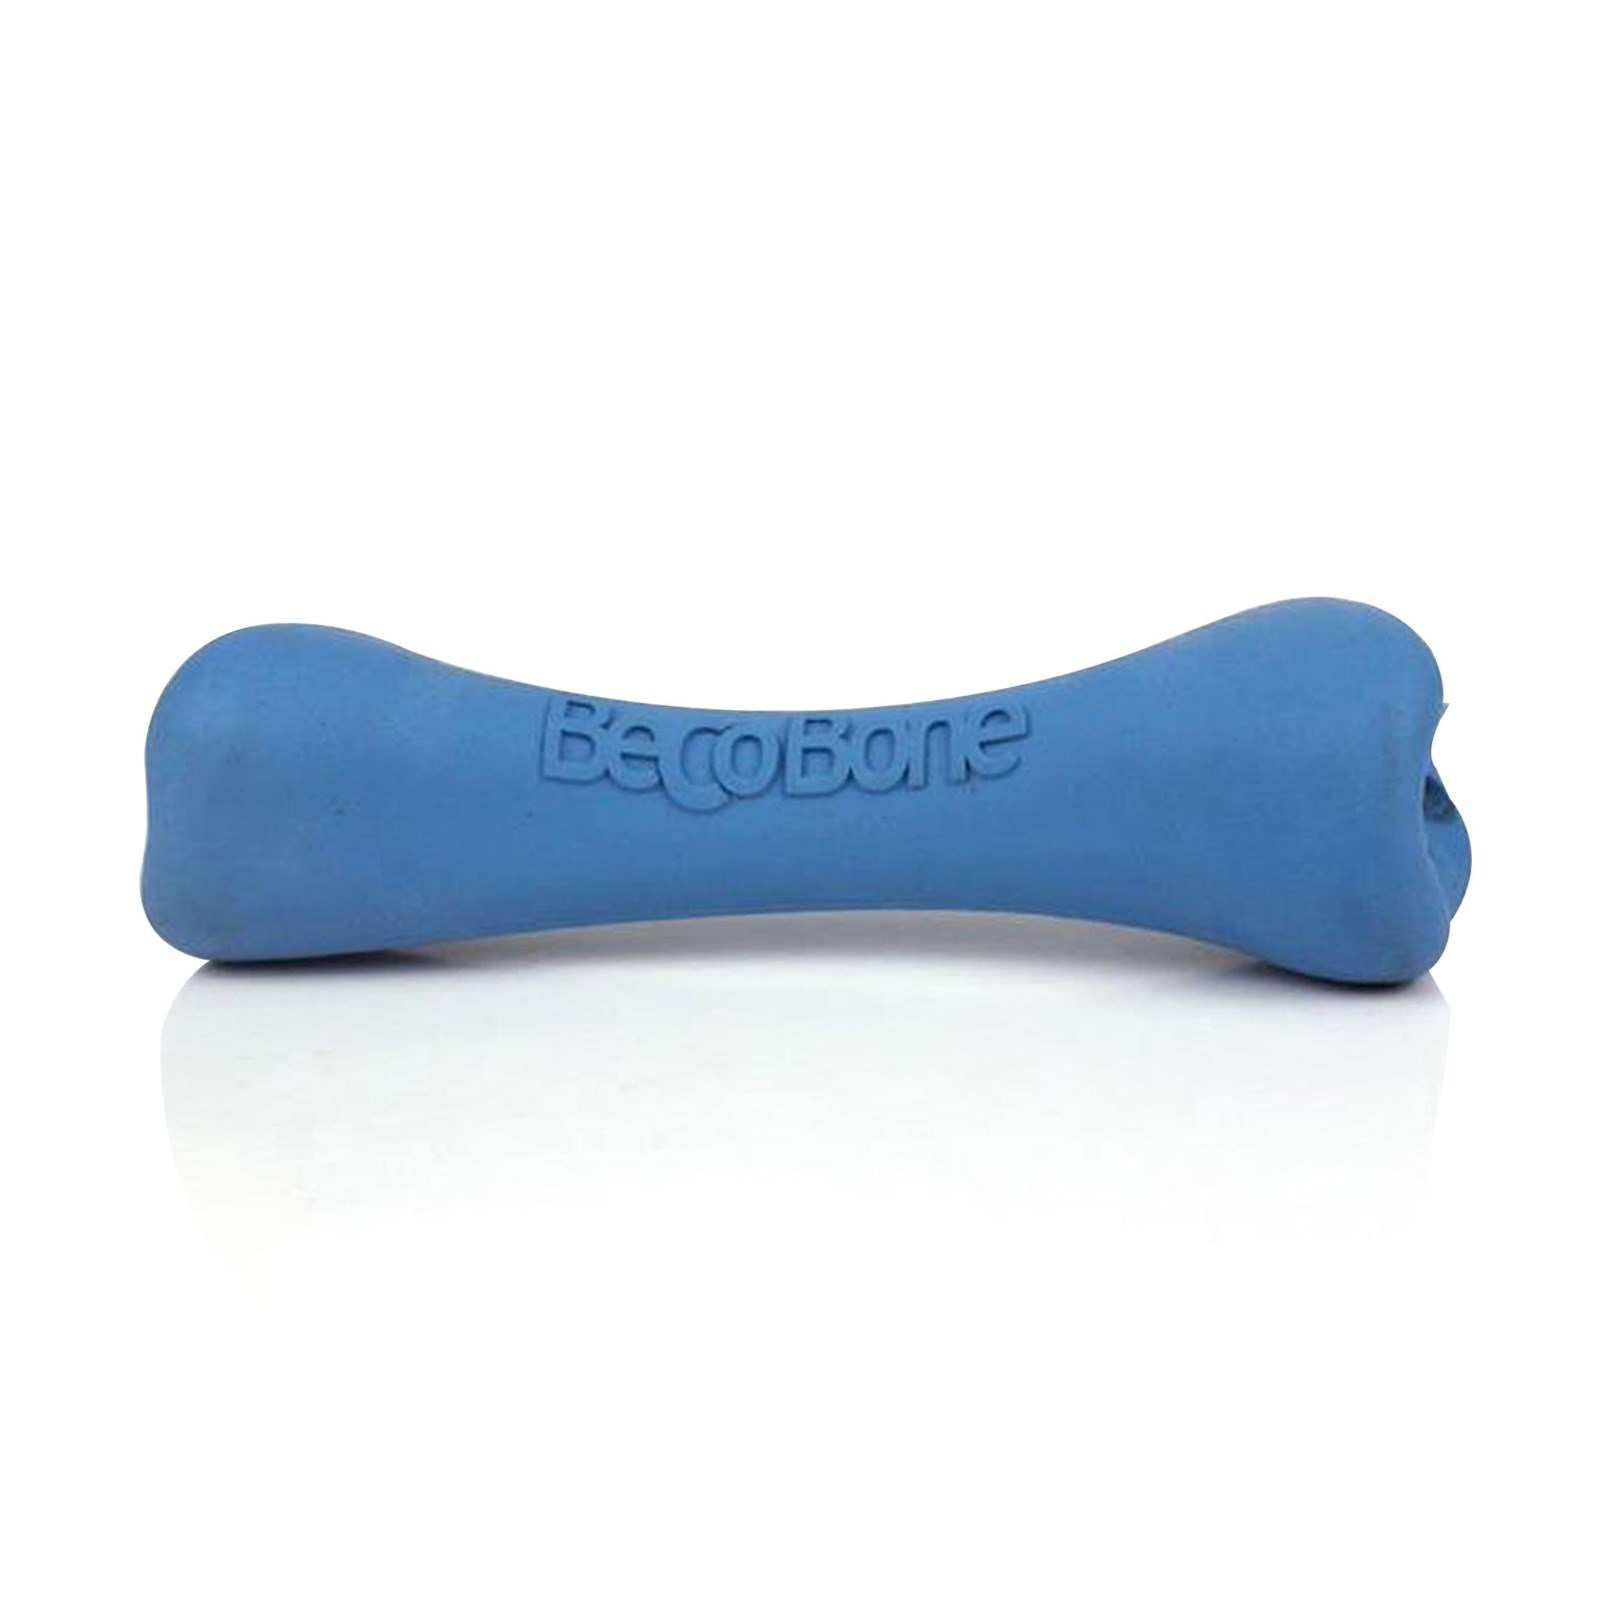 beco bone dog toy